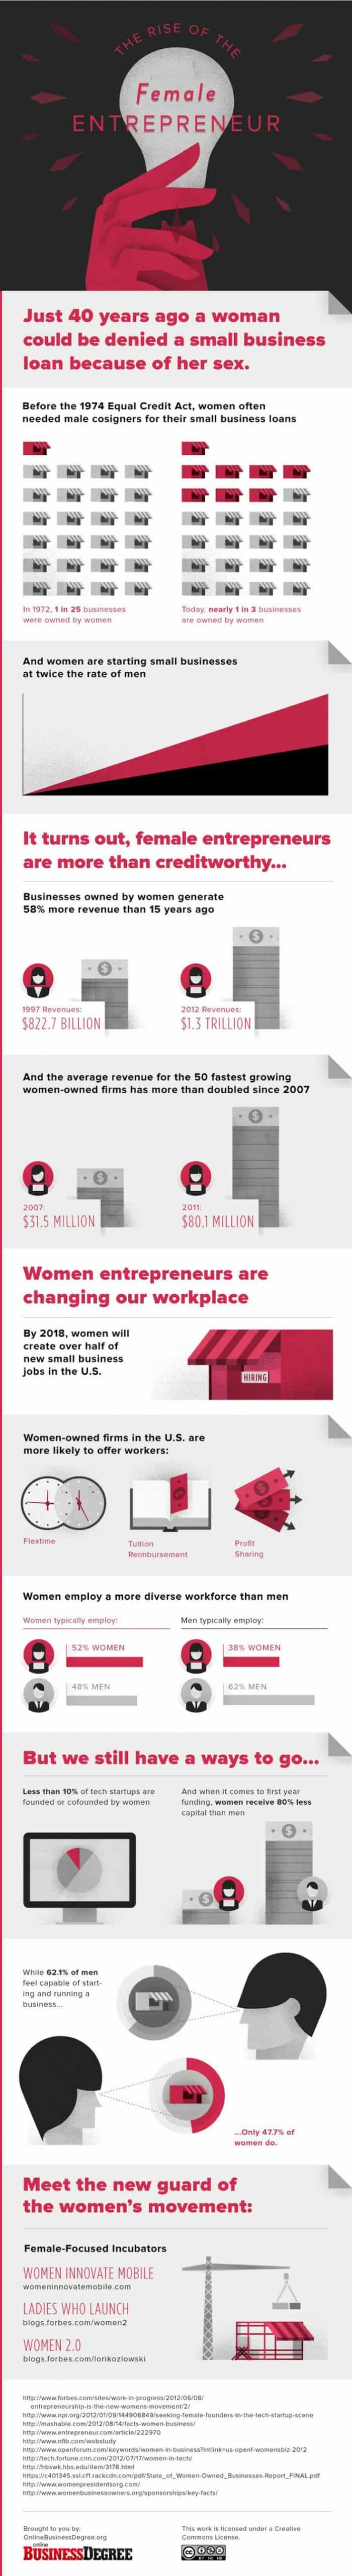 Rise of the Female Entrepreneur Infographic